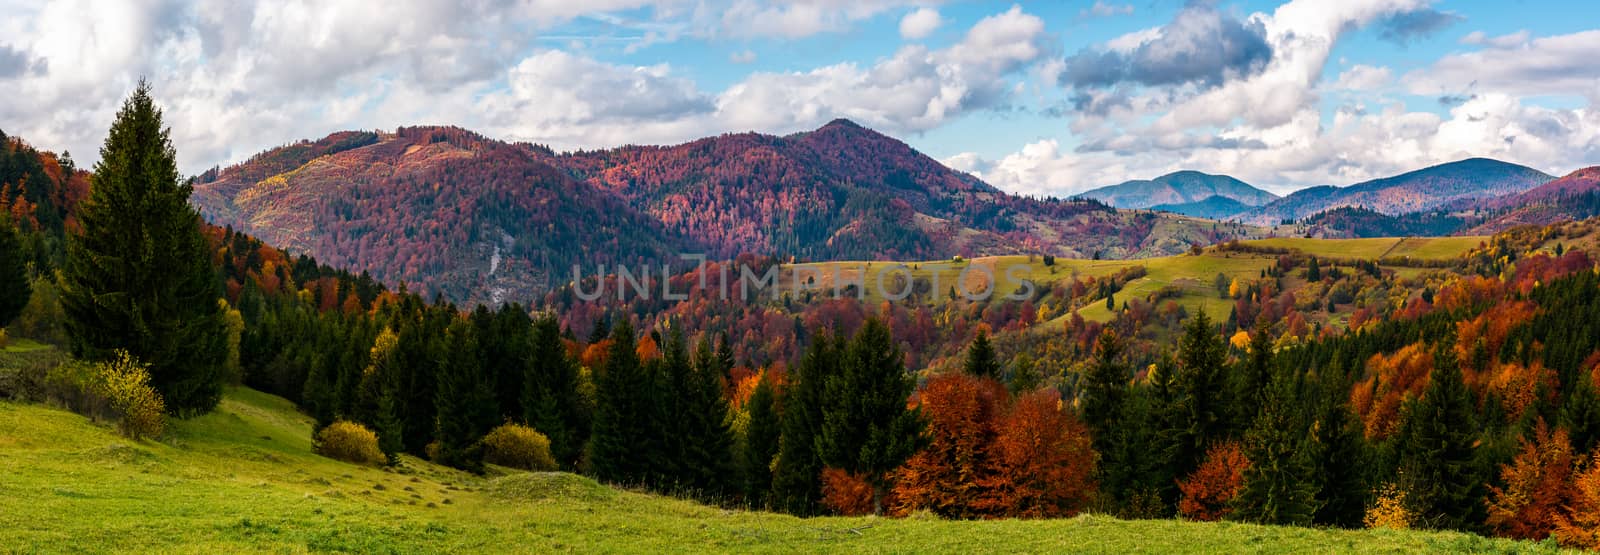 beautiful panorama of mountainous rural area by Pellinni